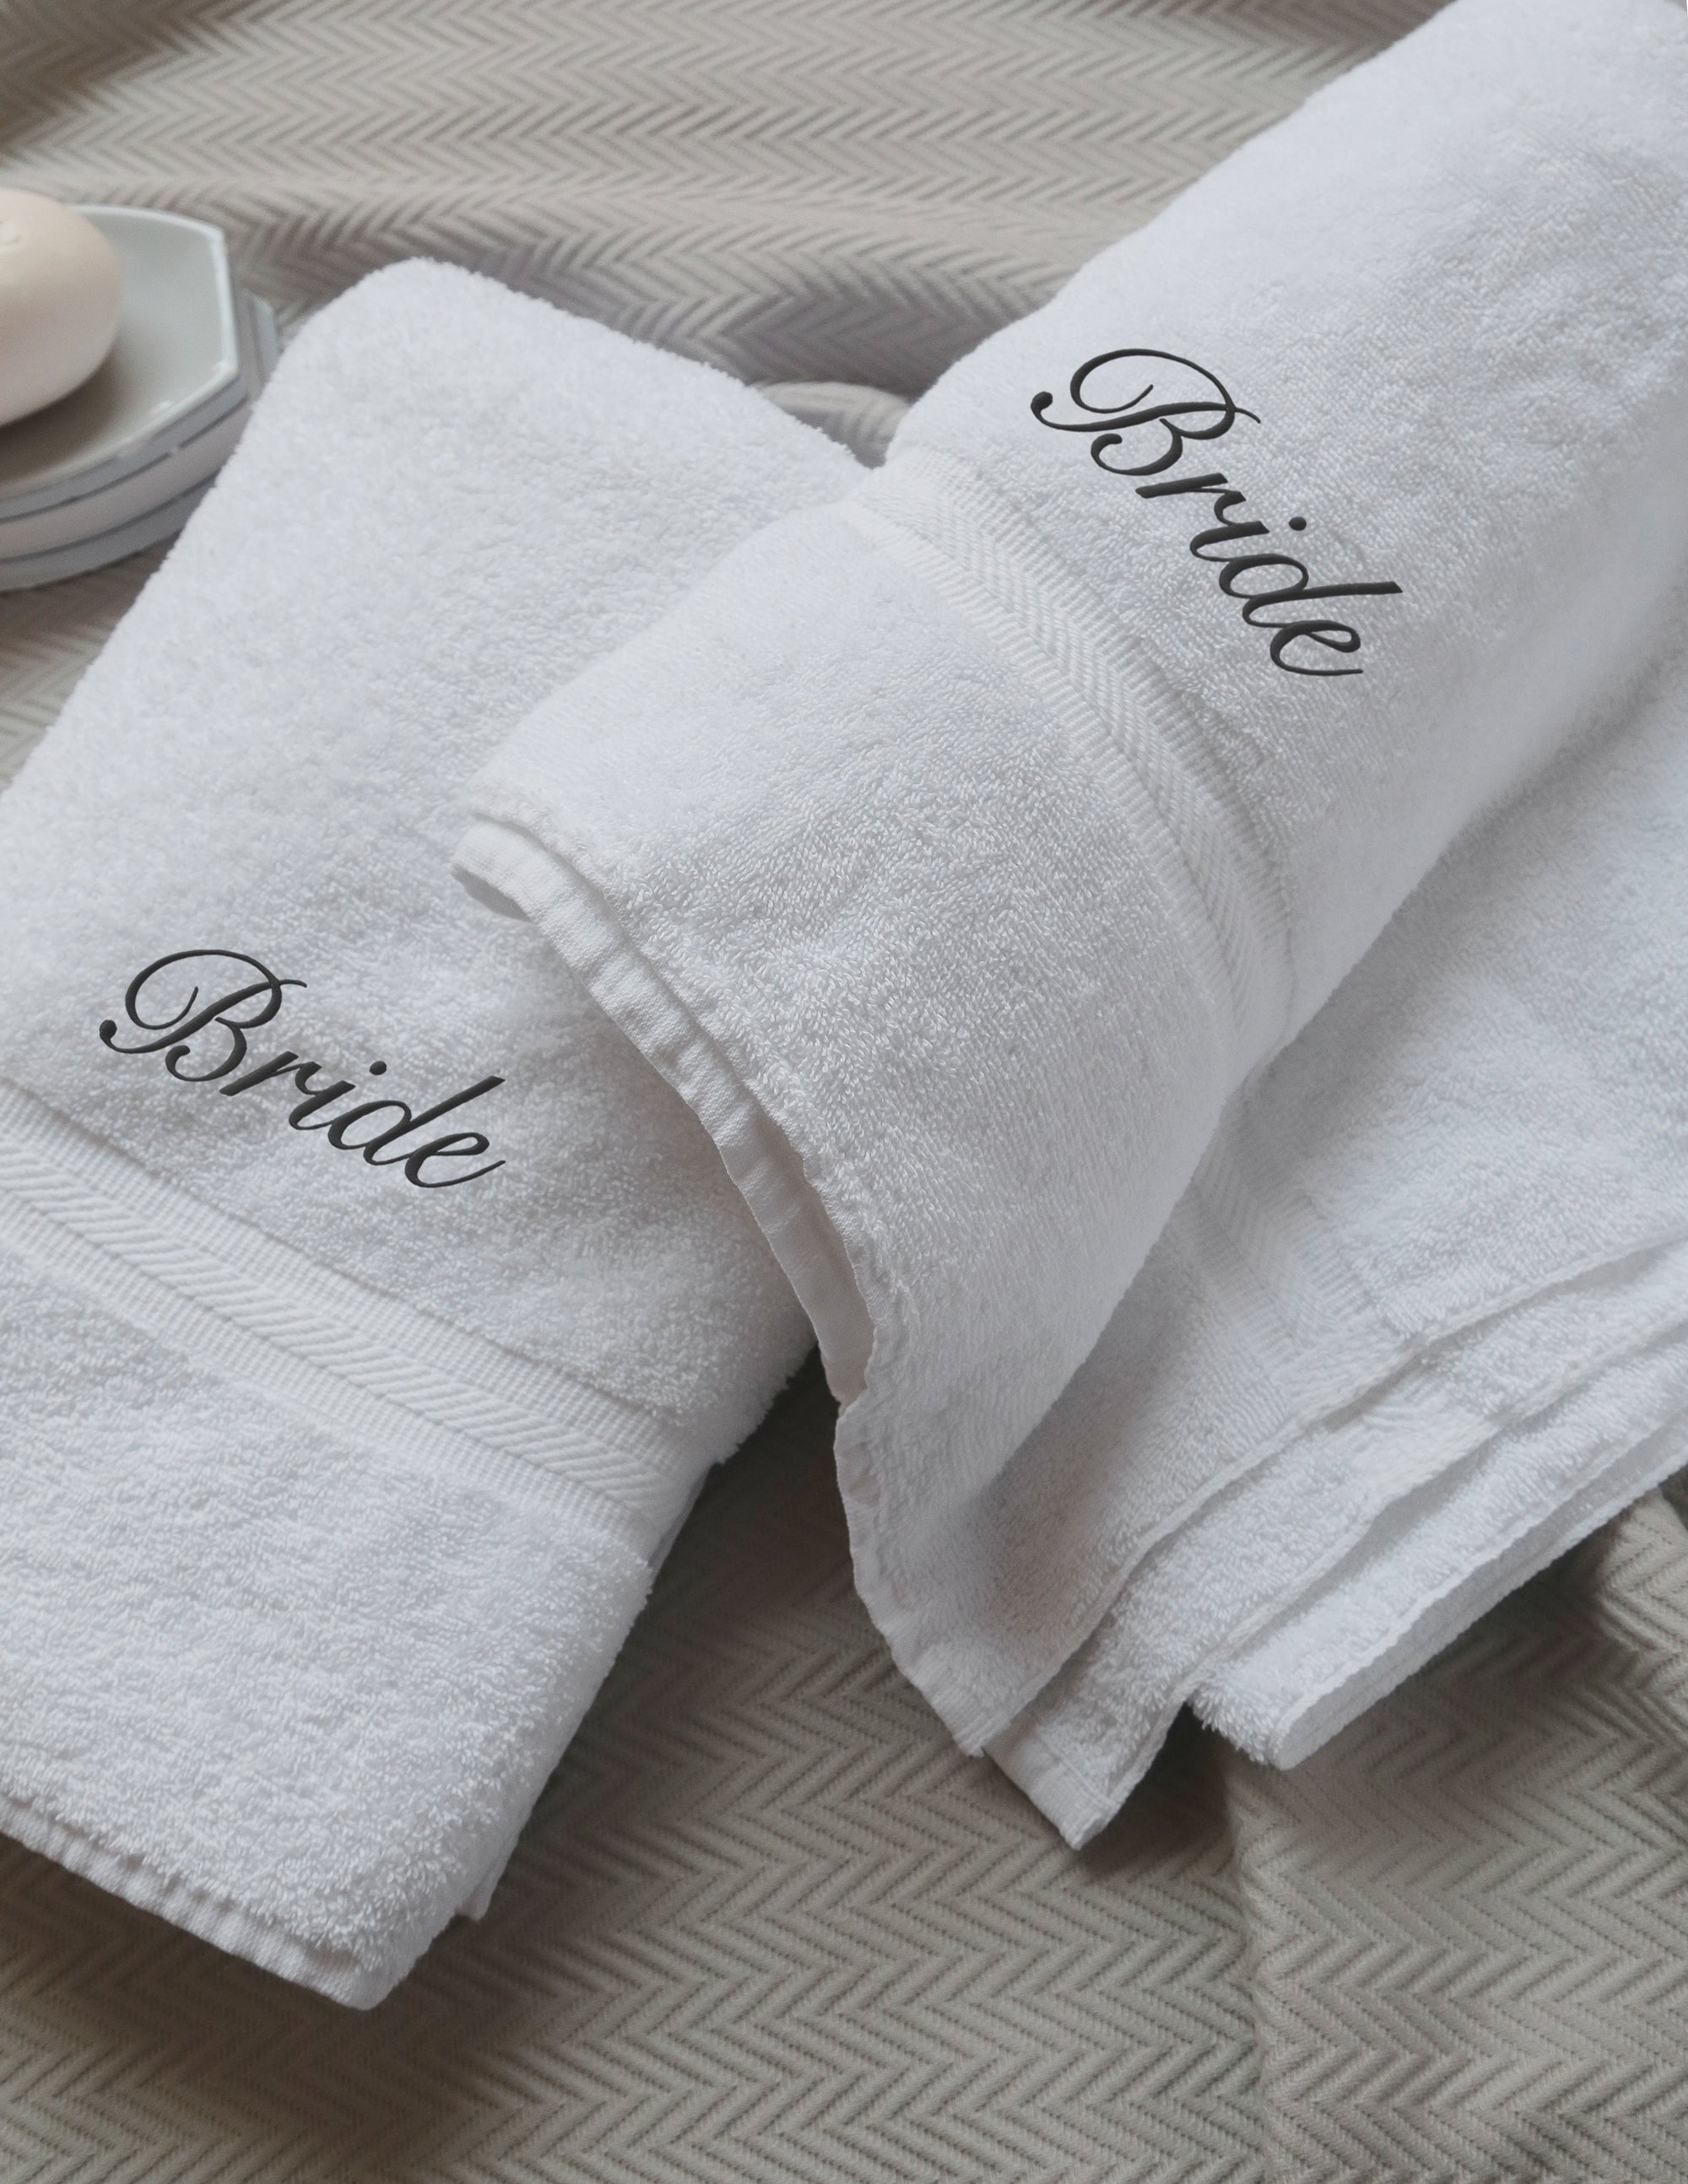 Monogrammed Set Bath Towels, Monogrammed Bath Sheet EXTRA Large